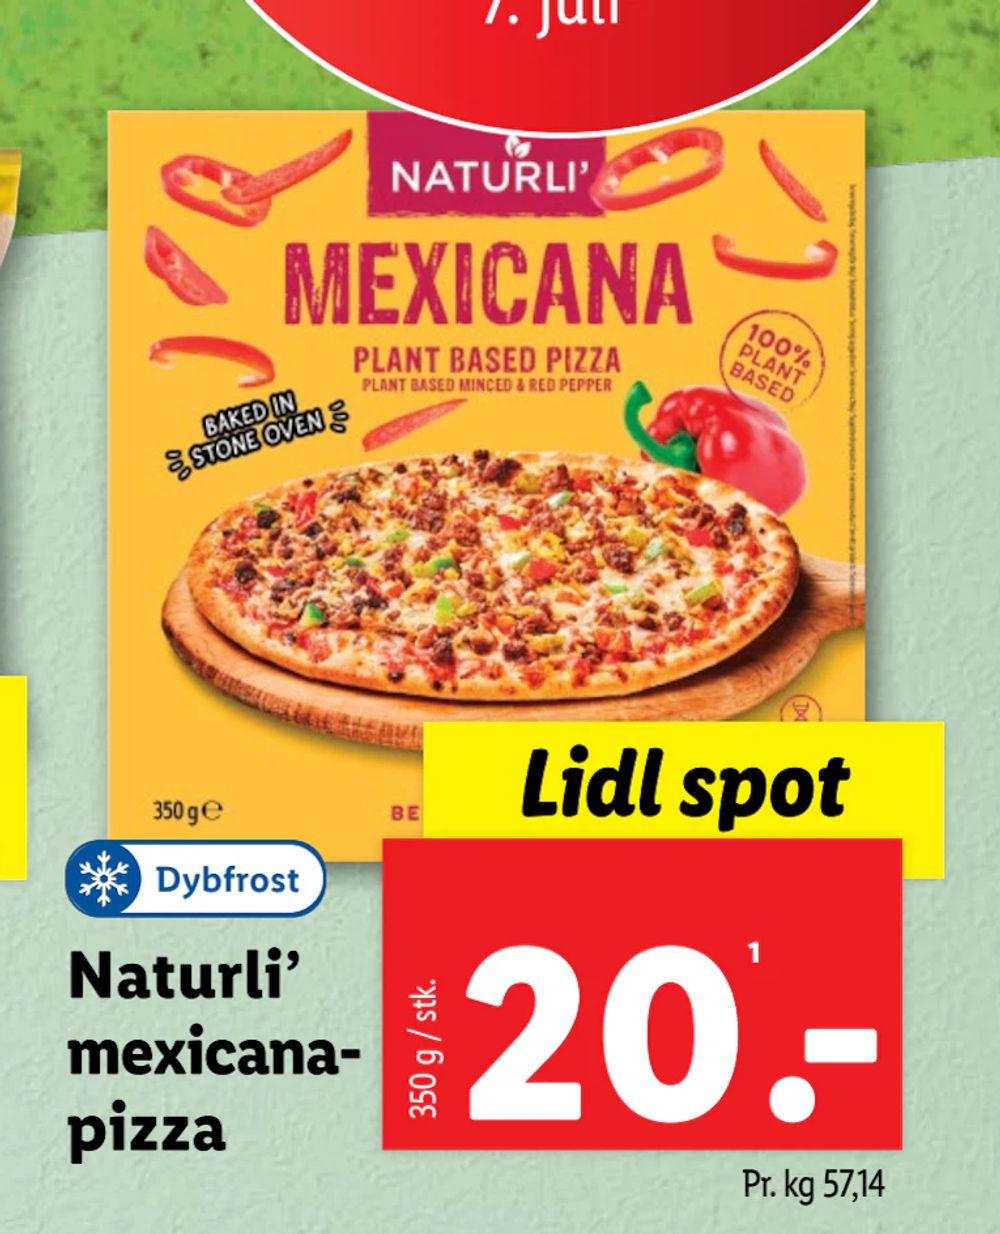 Tilbud på Naturli’ mexicanapizza fra Lidl til 20 kr.